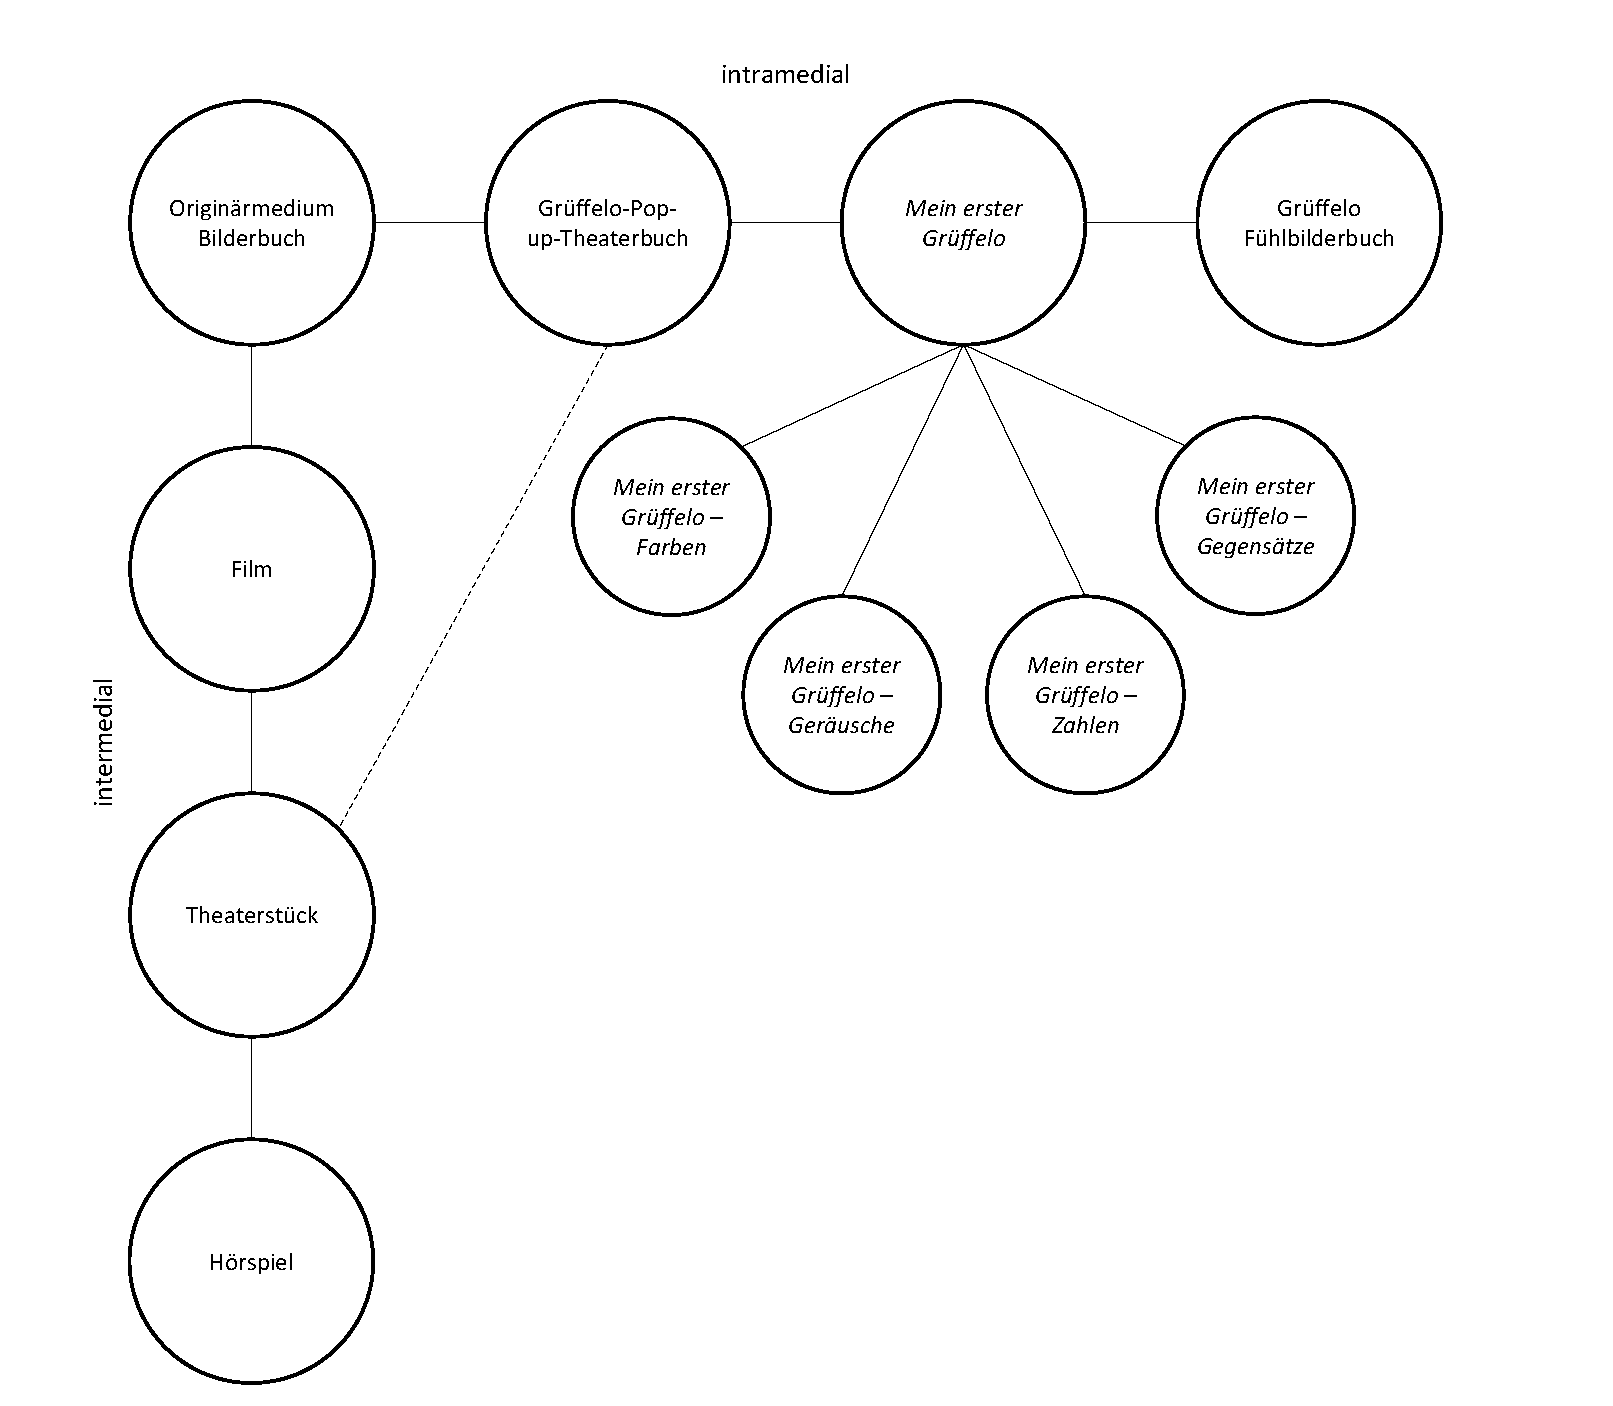 Abb. 2: Mediale Struktur des Grüffelo-Medienverbunds (Reistorff 2020)